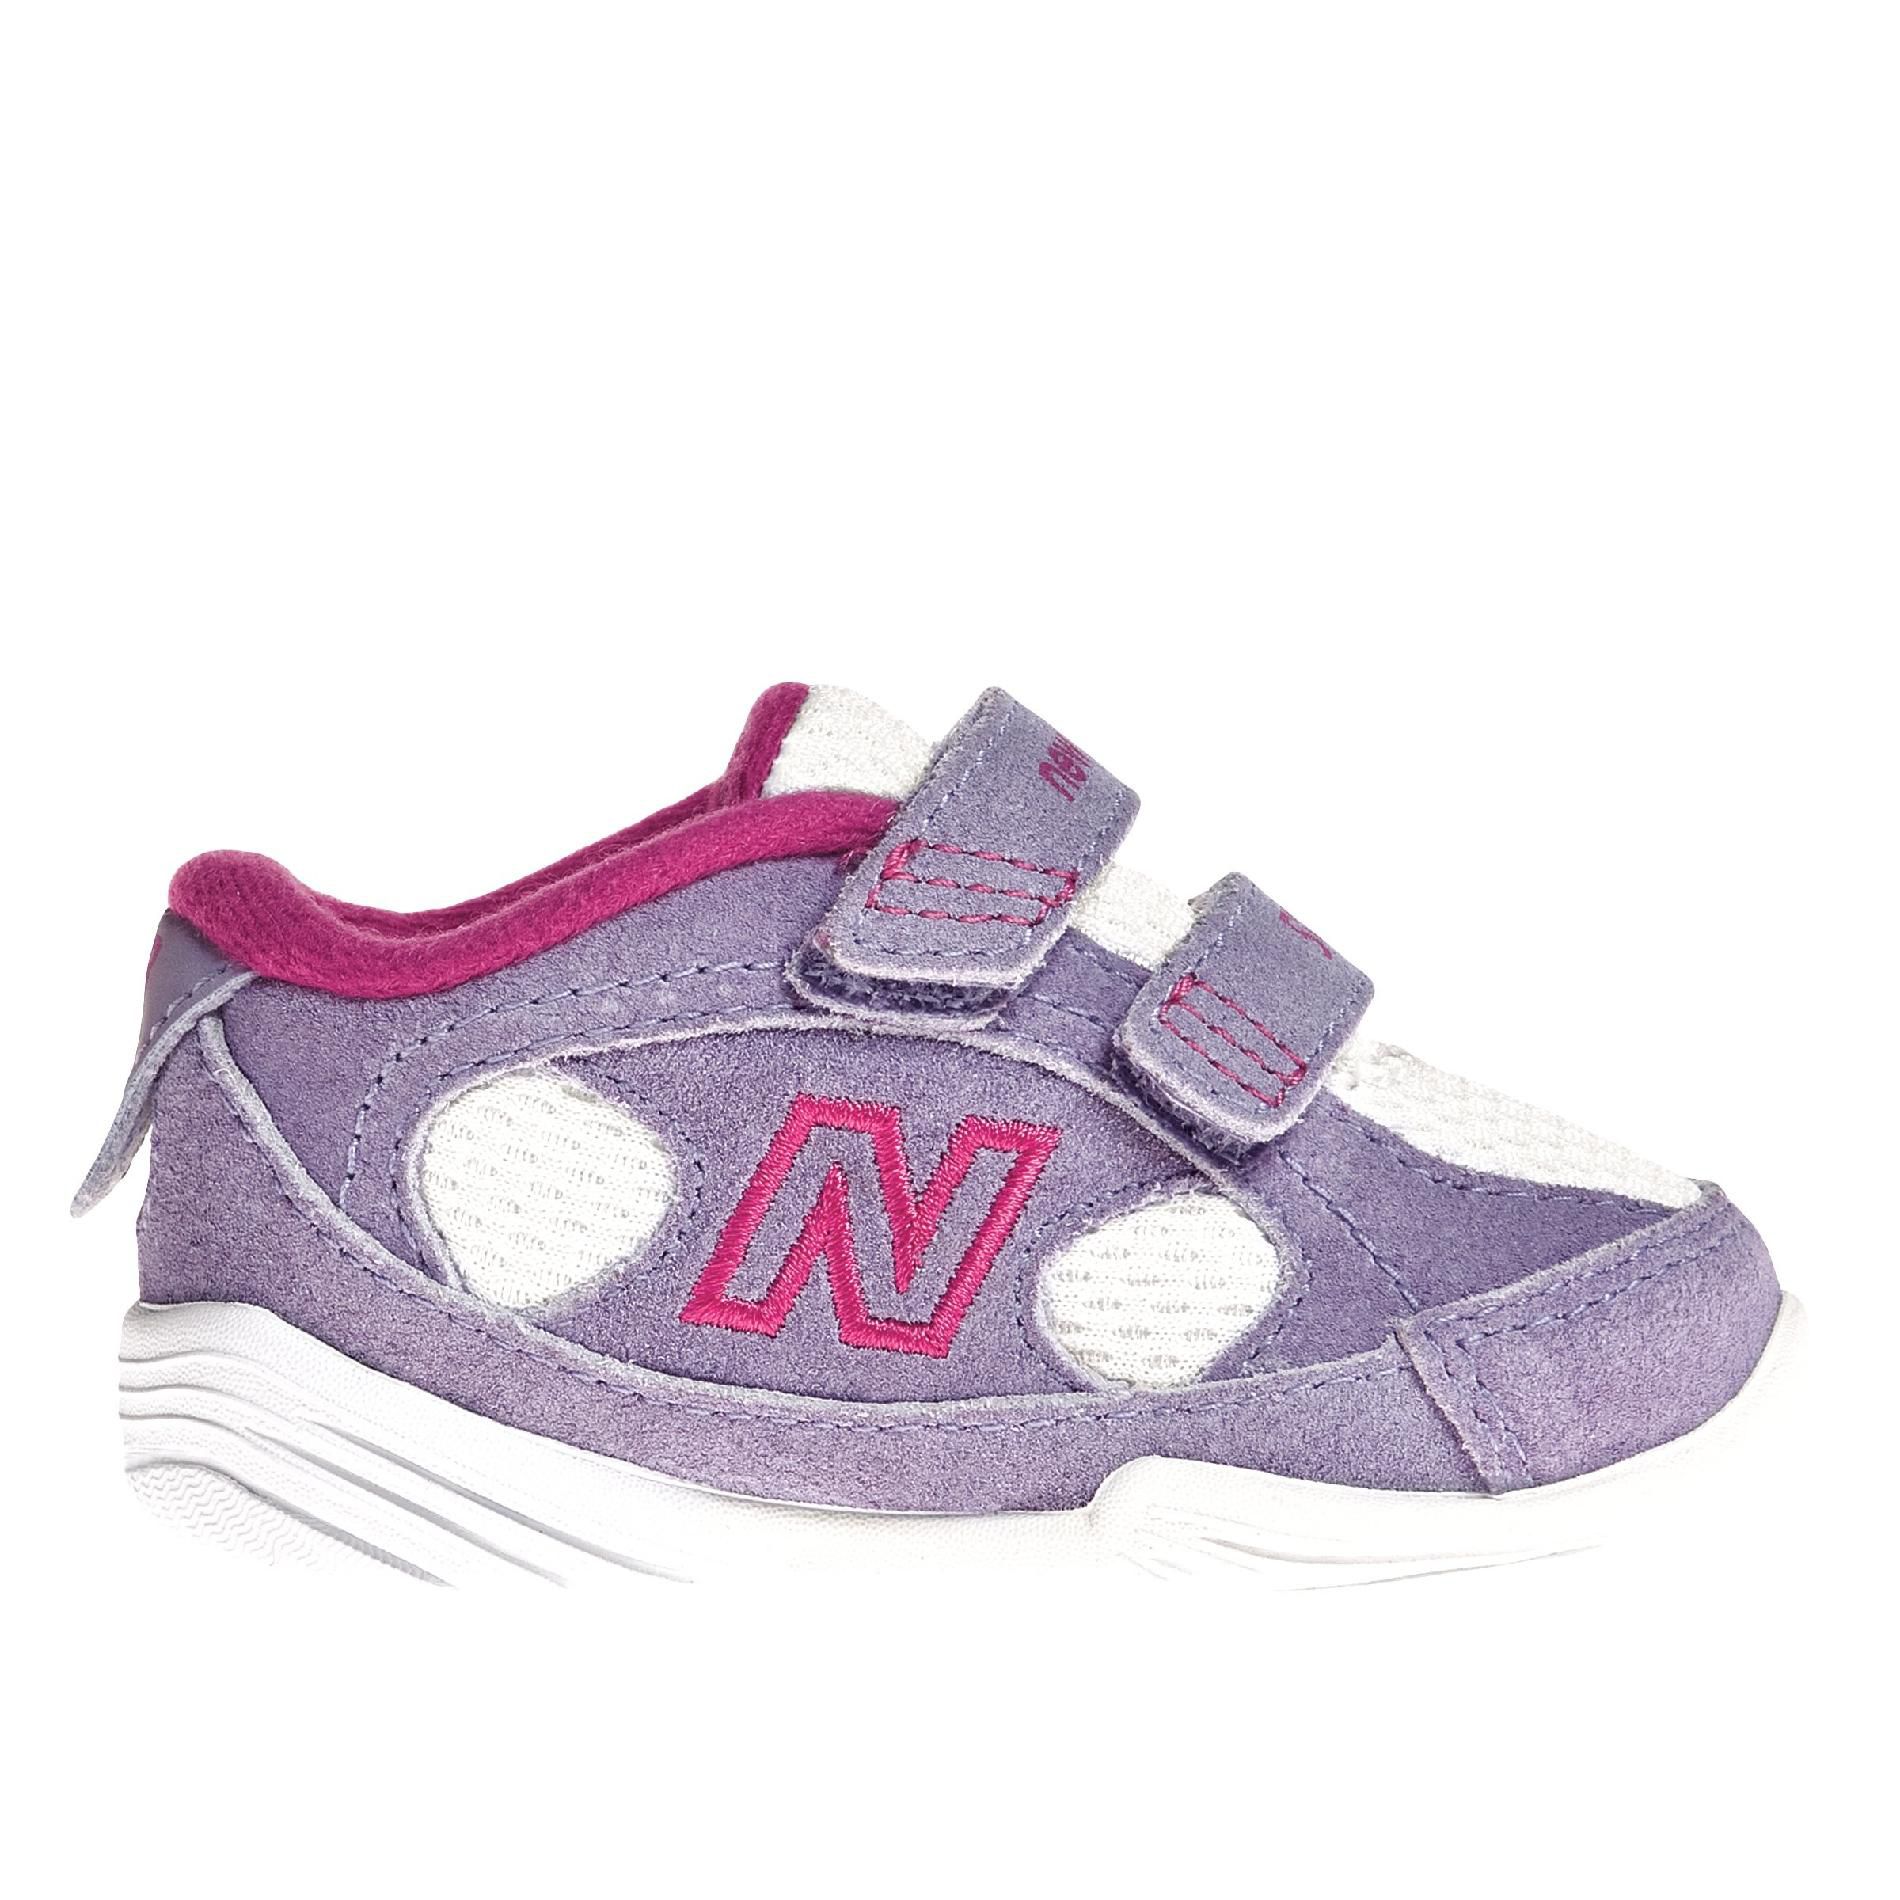 KV504 Toddler Girl's Athletic Shoe - Purple